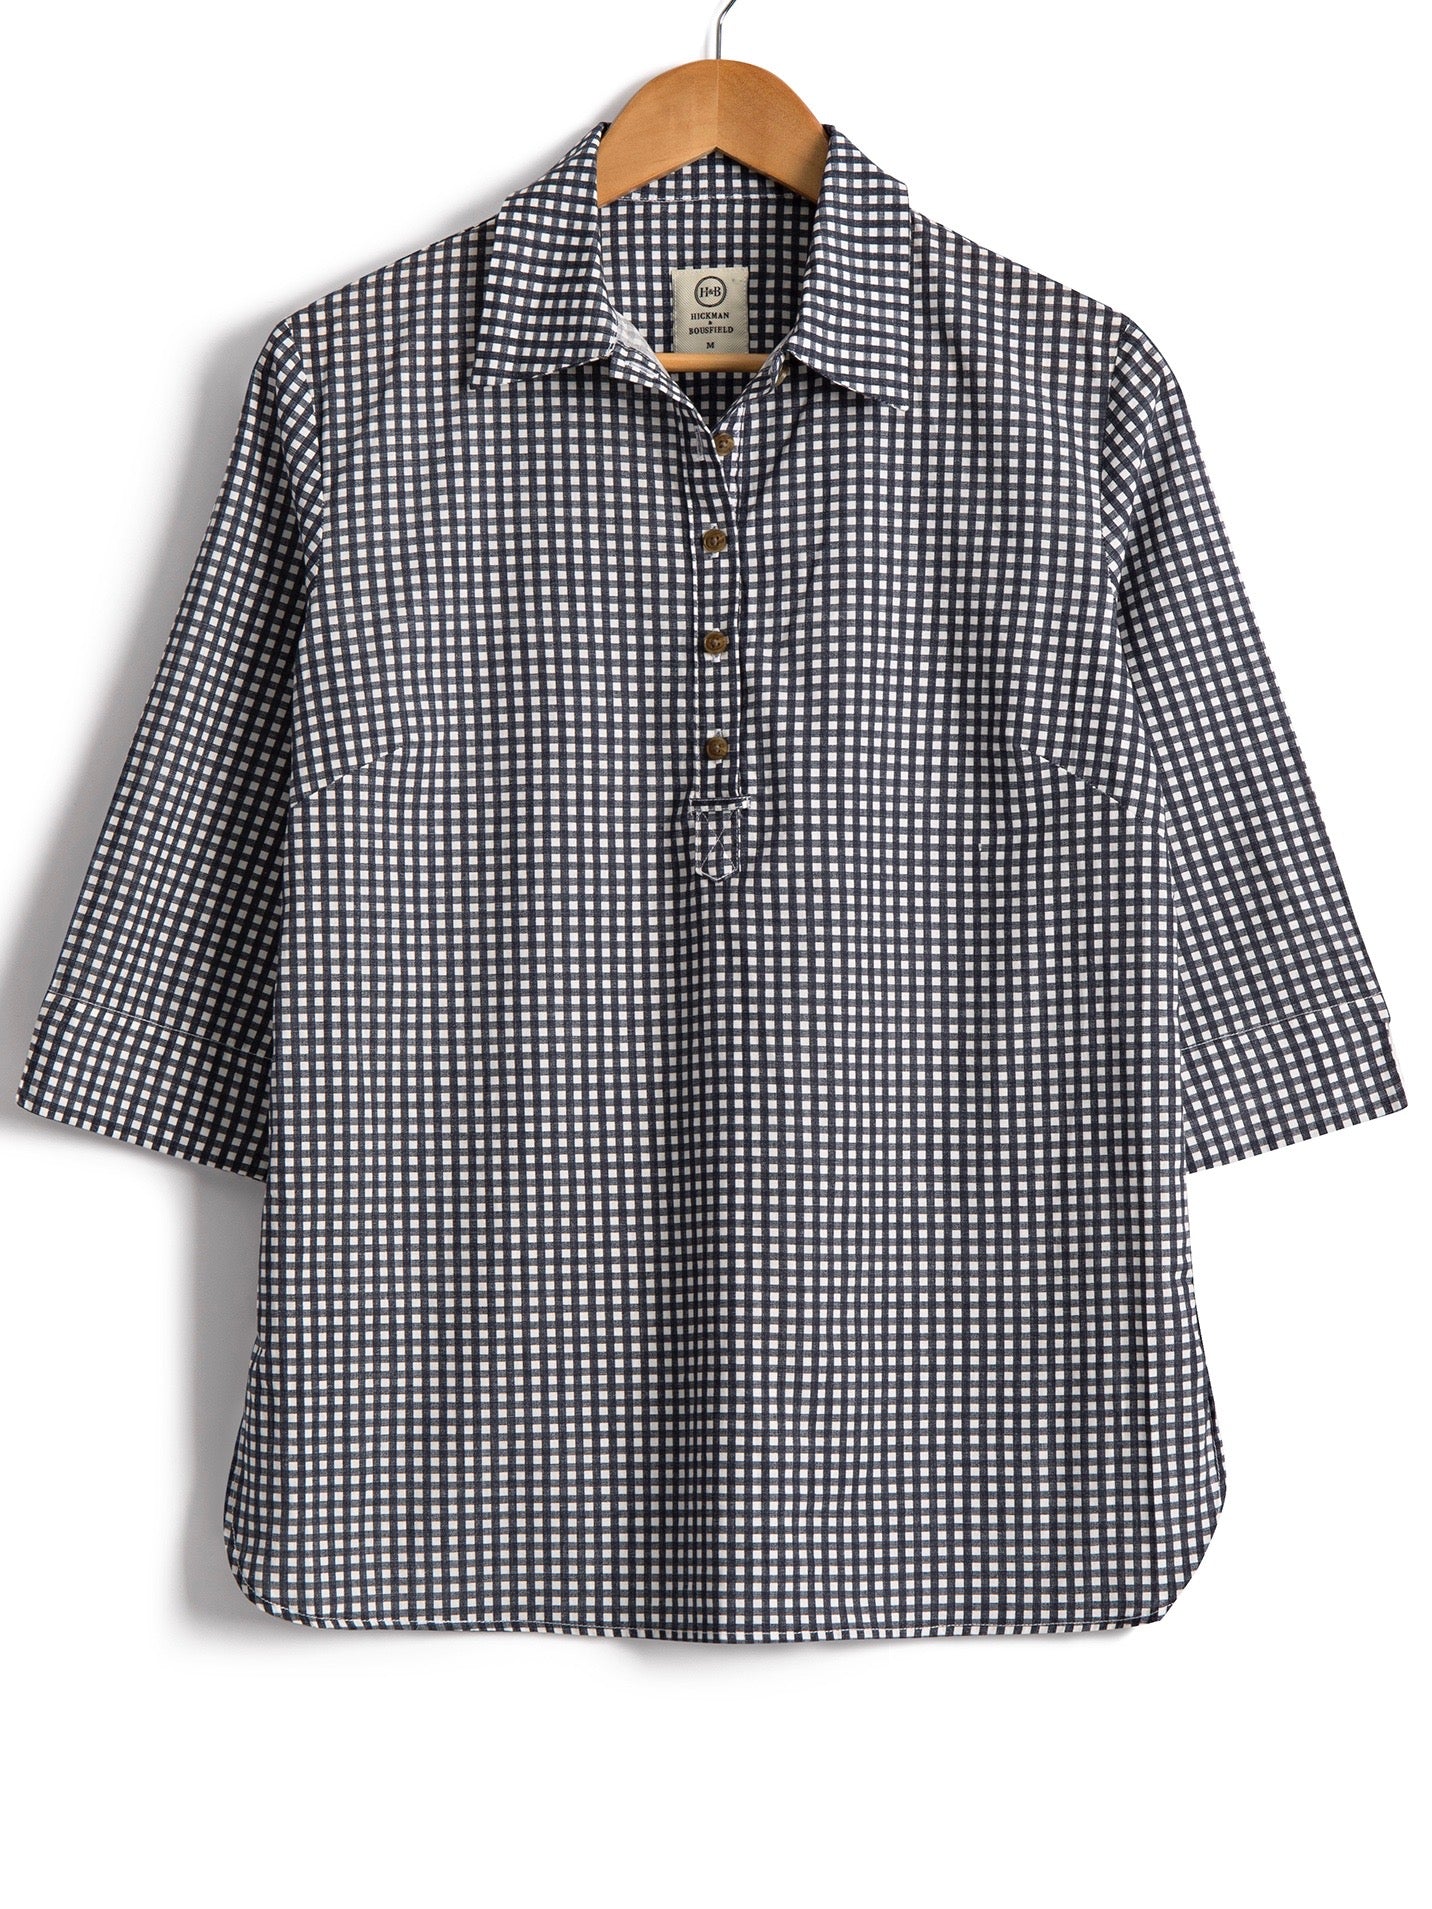 Safari Shirt in Cotton Gingham, Shirt, Hickman & Bousfied - Hickman & Bousfield, Safari and Travel Clothing